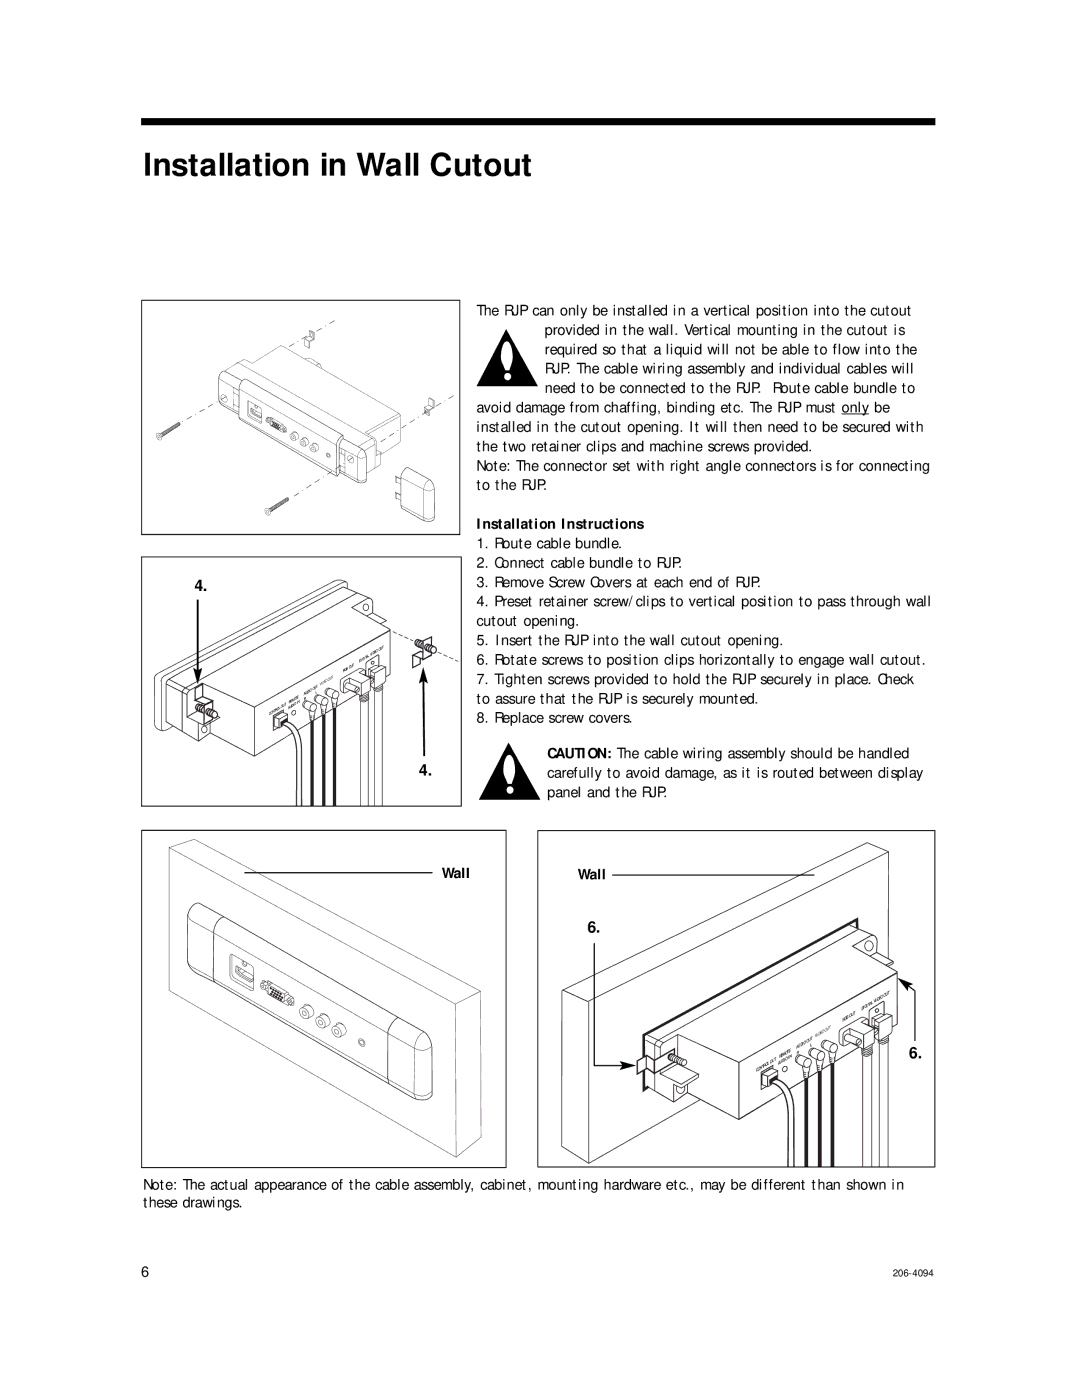 LG Electronics 202B, RJP-201B setup guide Installation in Wall Cutout, Installation Instructions 